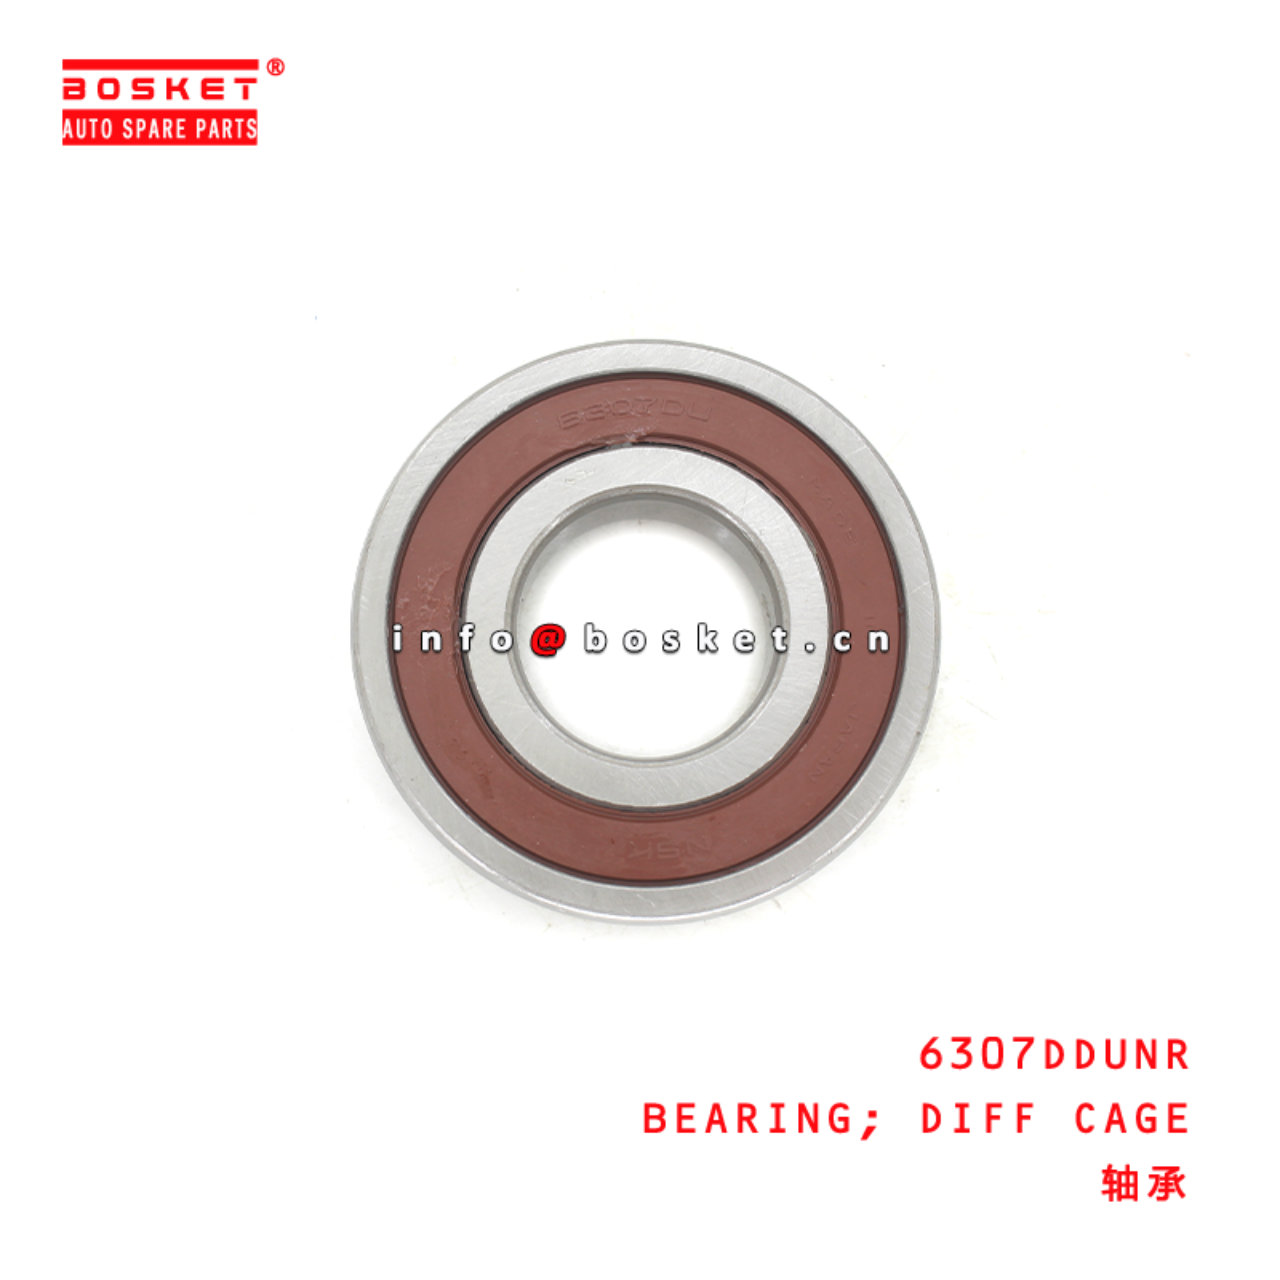 6307DDUNR Outer Rear Bearing Suitable for ISUZU